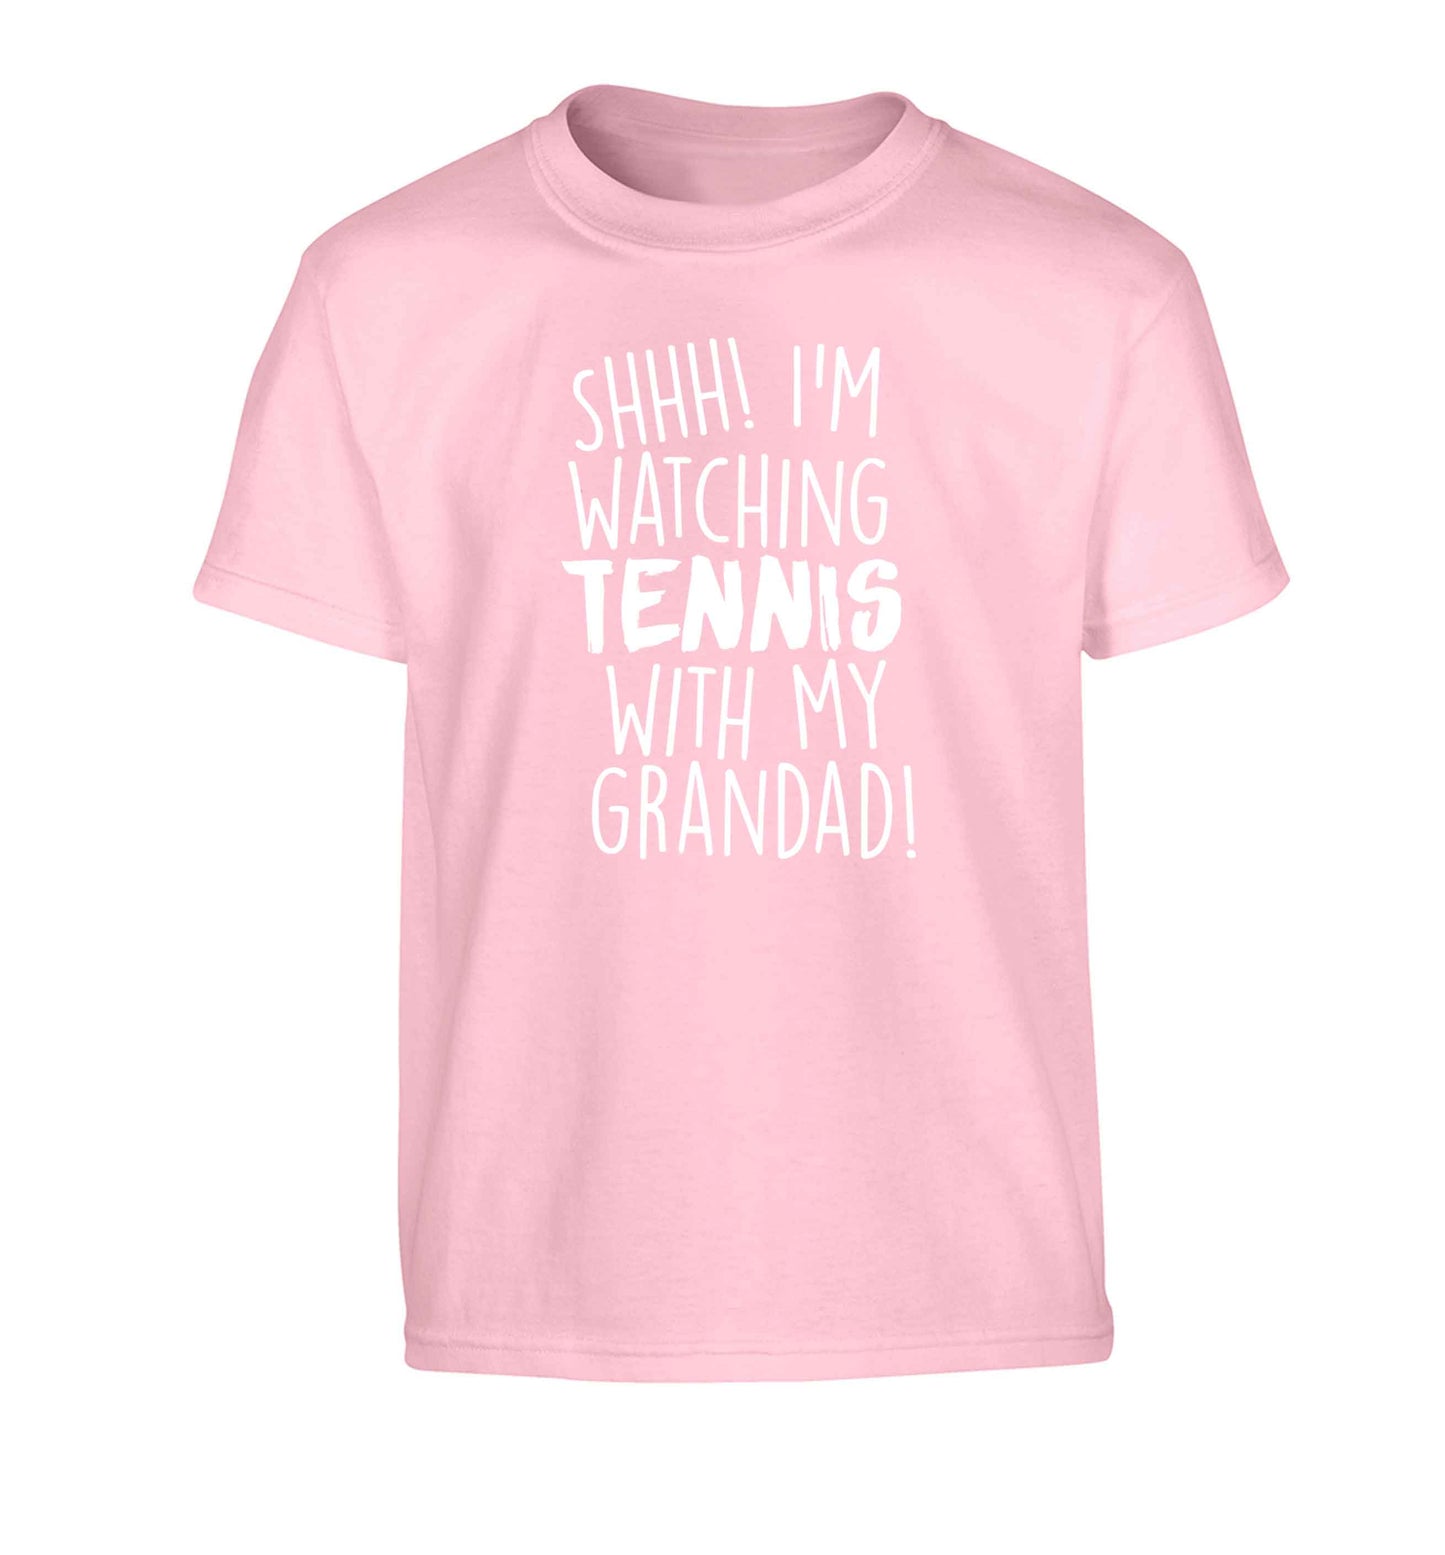 Shh! I'm watching tennis with my grandad! Children's light pink Tshirt 12-13 Years